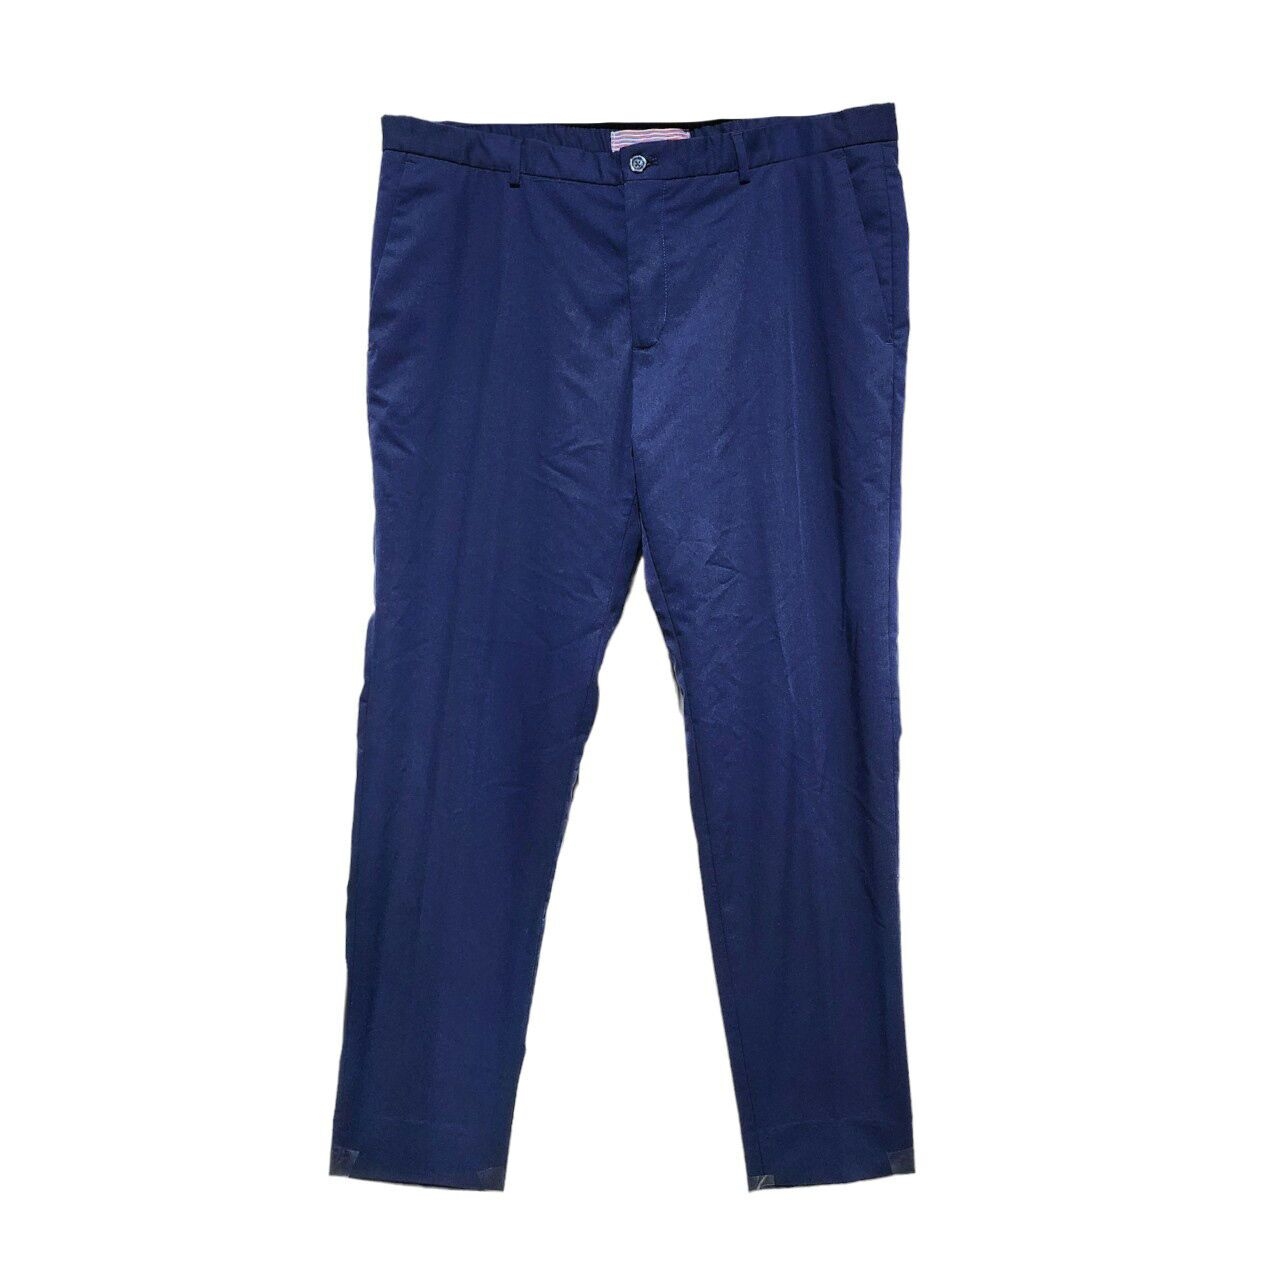 Zara Navy Long Pants